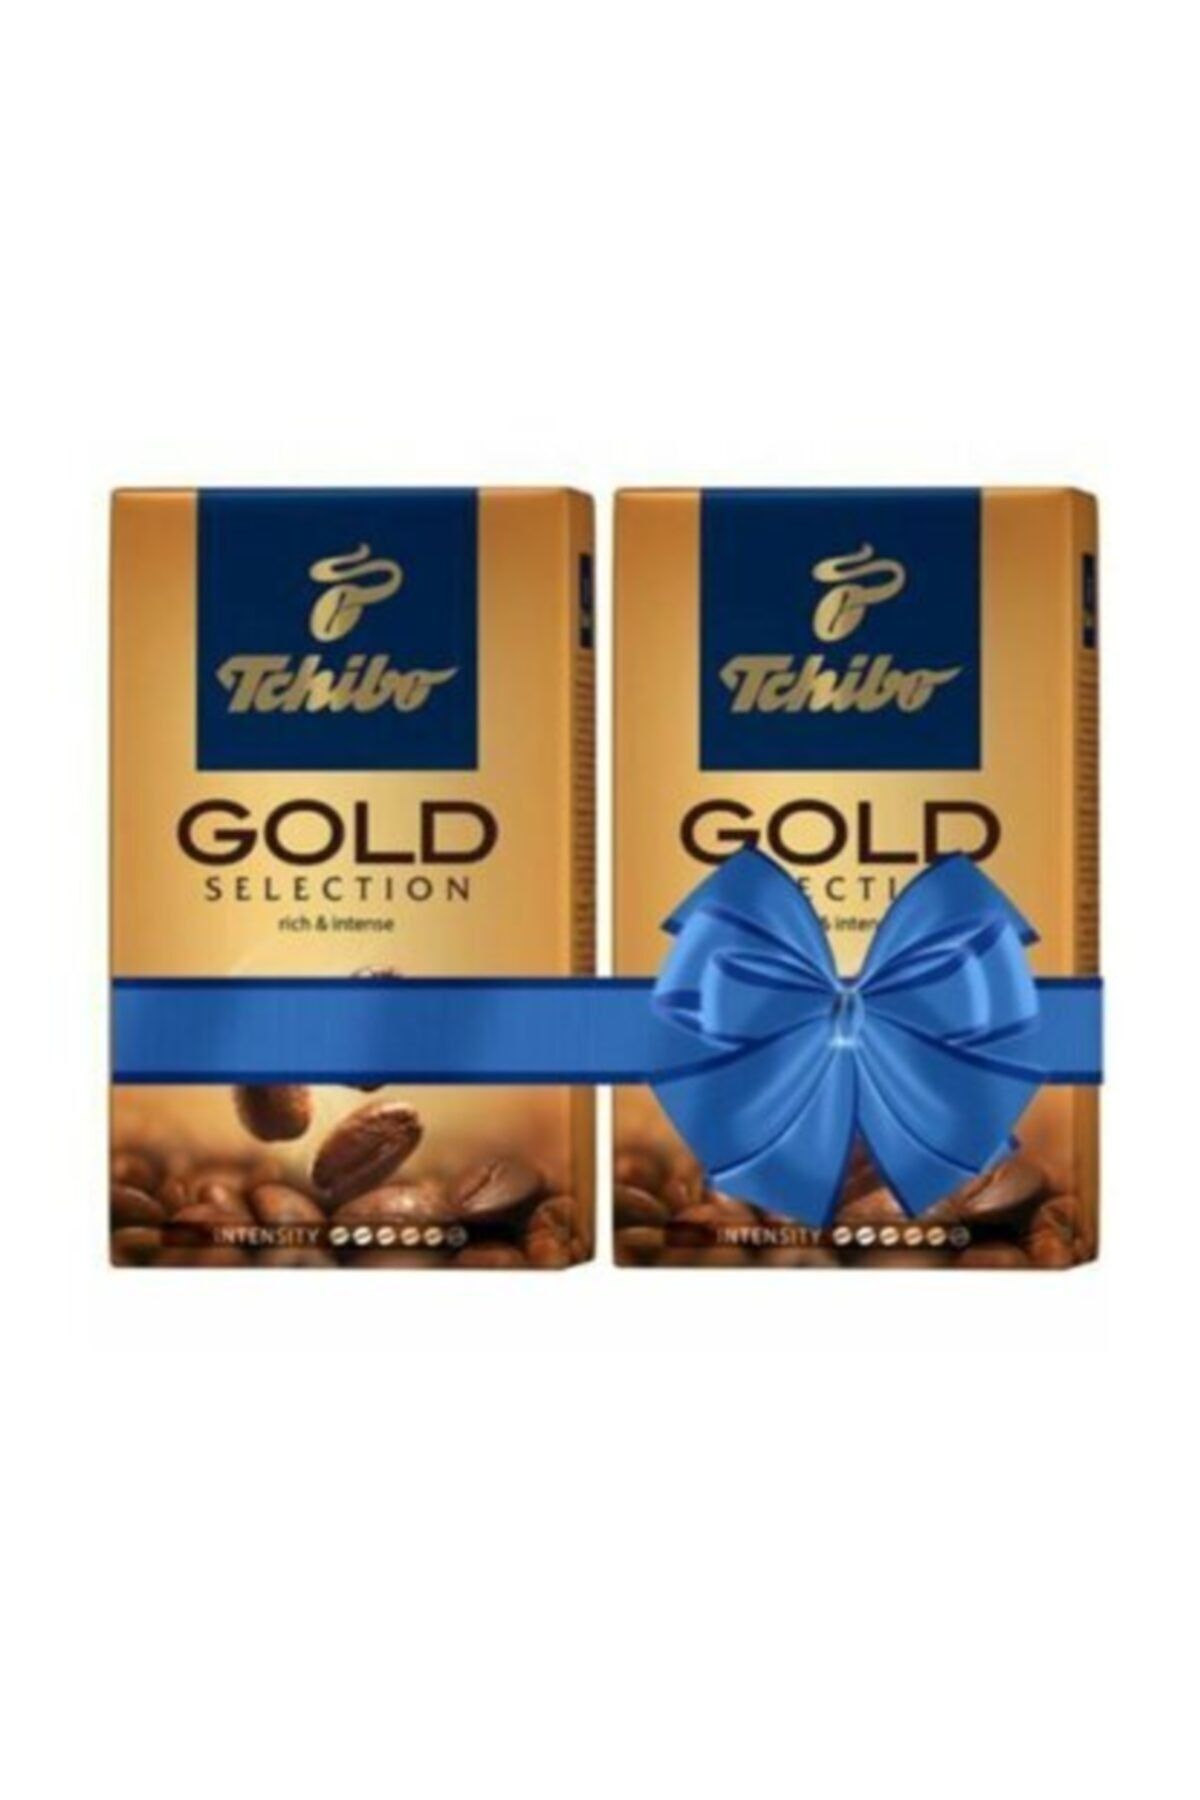 Tchibo Gold Selection Öğütülmüş Filtre Kahve 2 Adet 250g